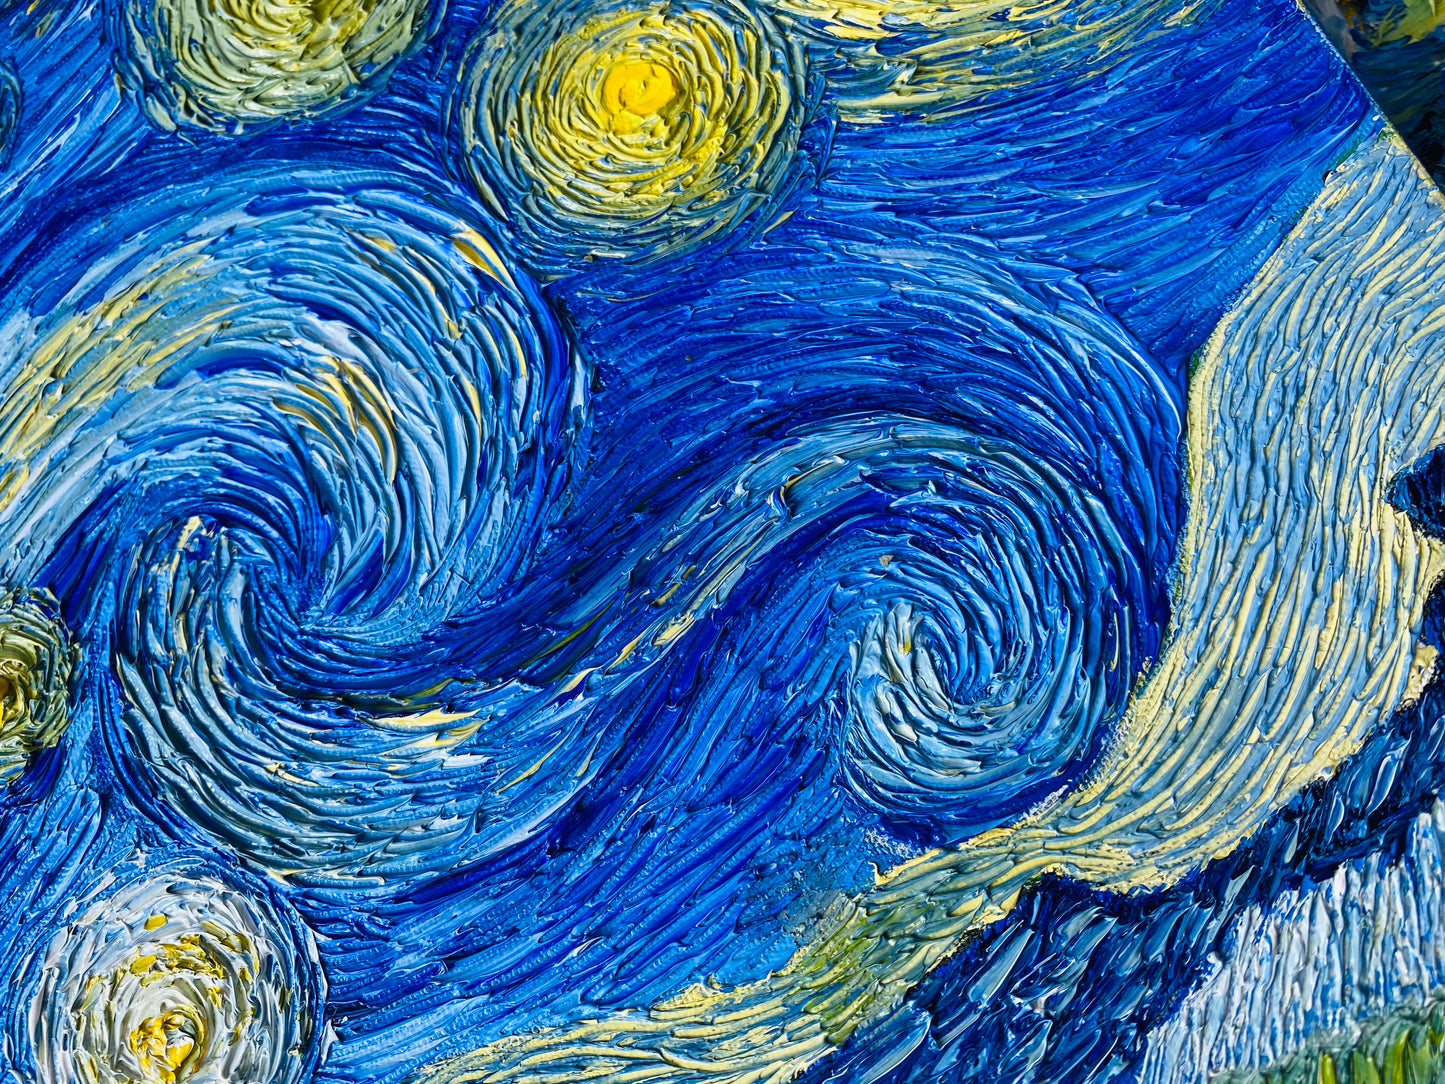 “Van Gogh Inspired Starry Nights”